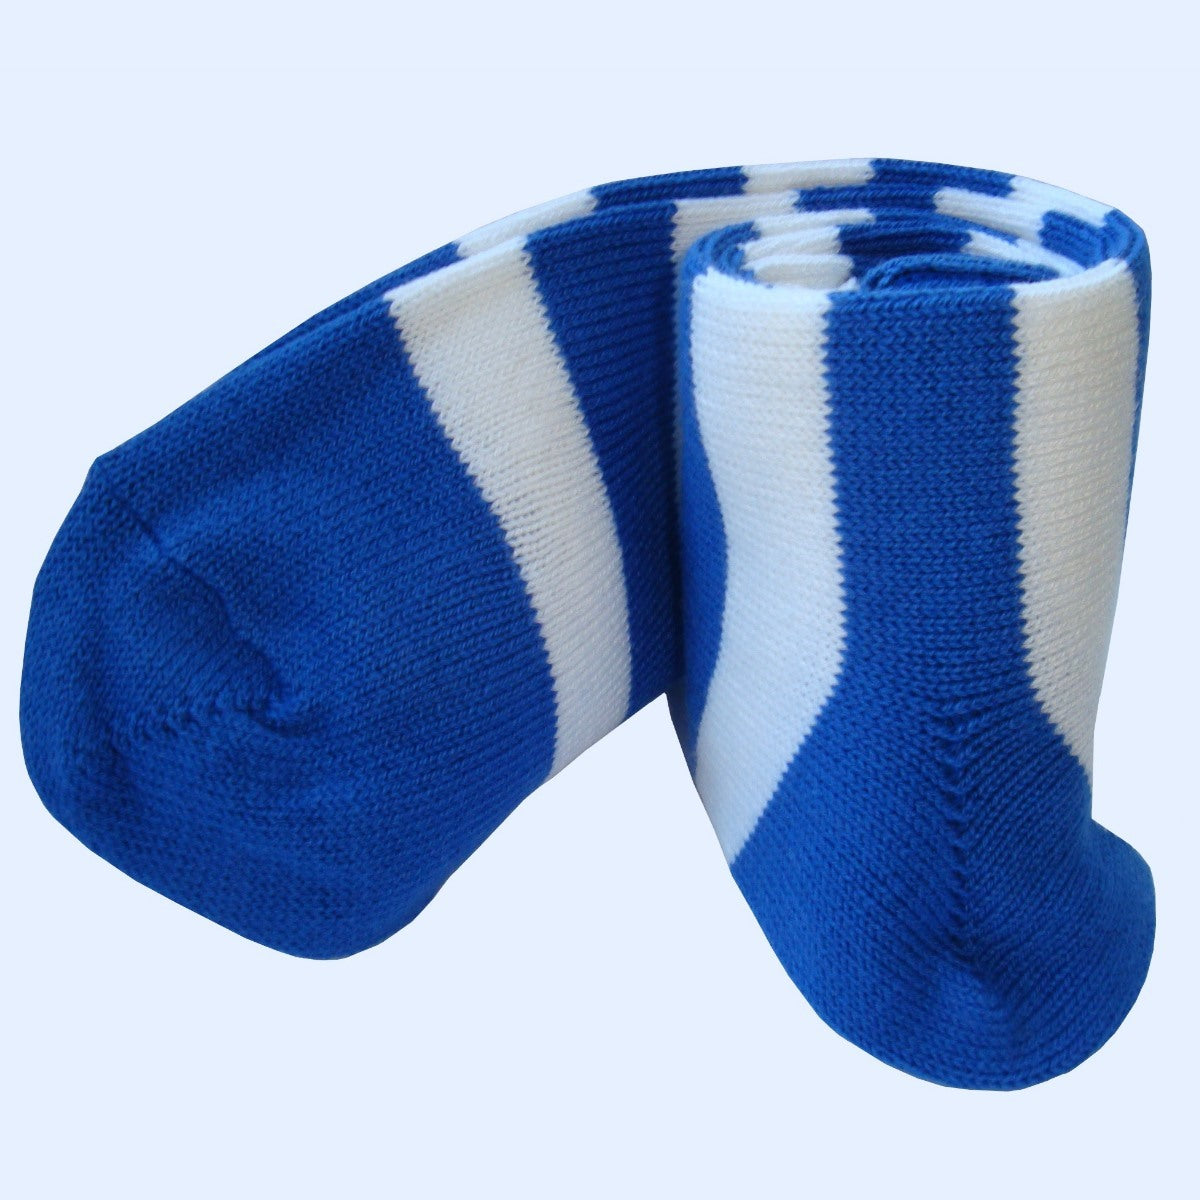 buy|blue|white|hooped|striped|football|socks|shop|bassinandbrown ...